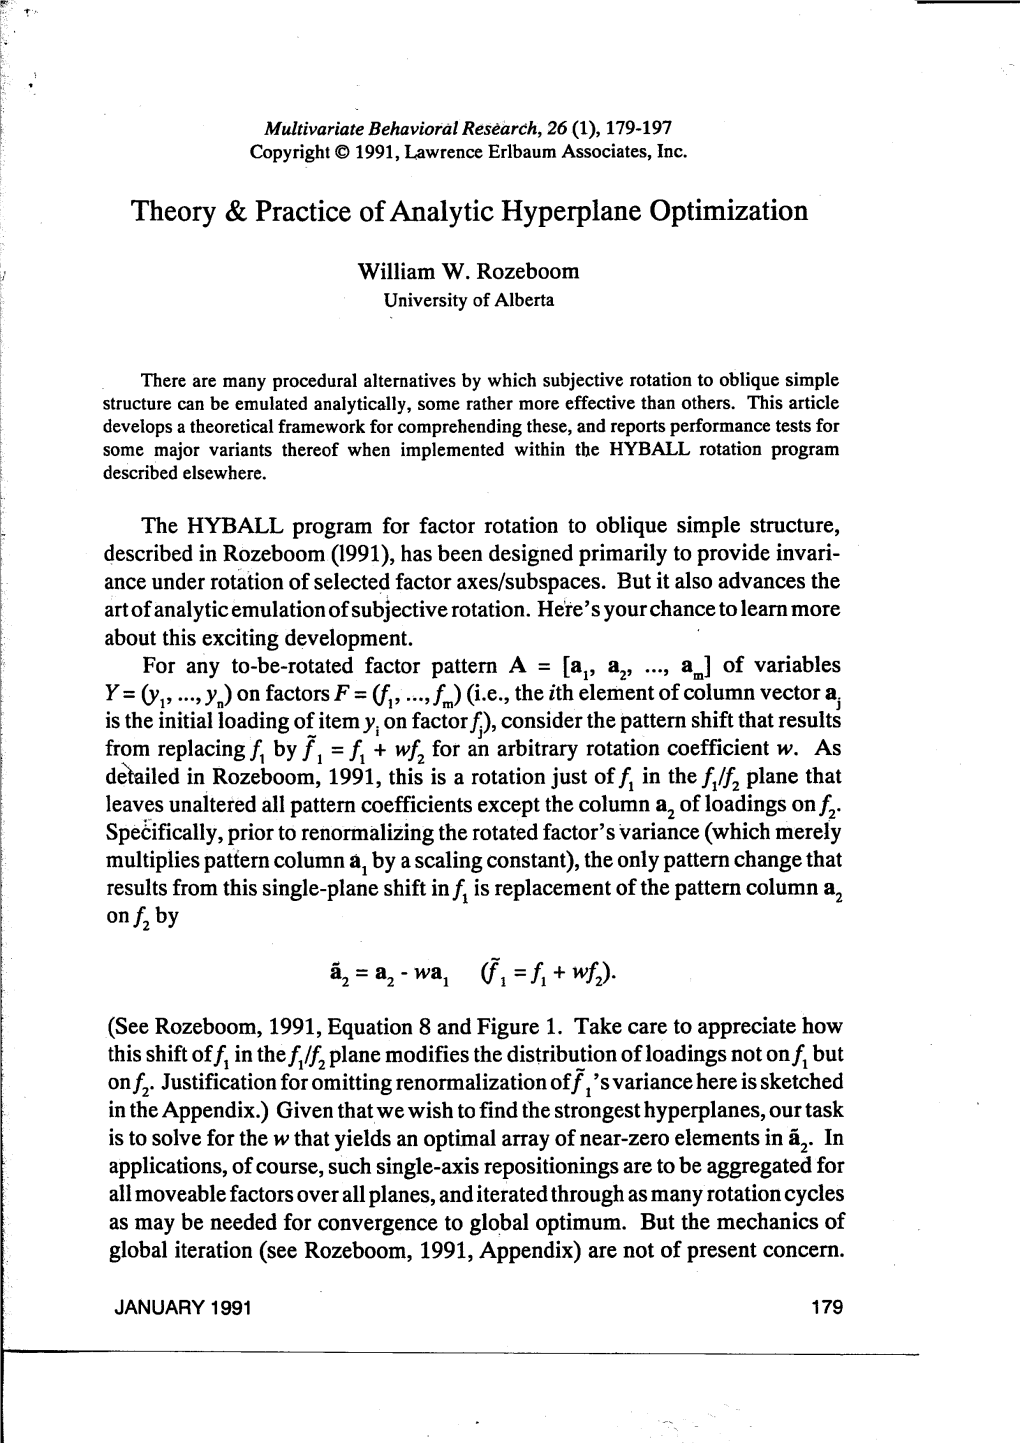 Theory & Practice of Analytic Hyperplane Optimization